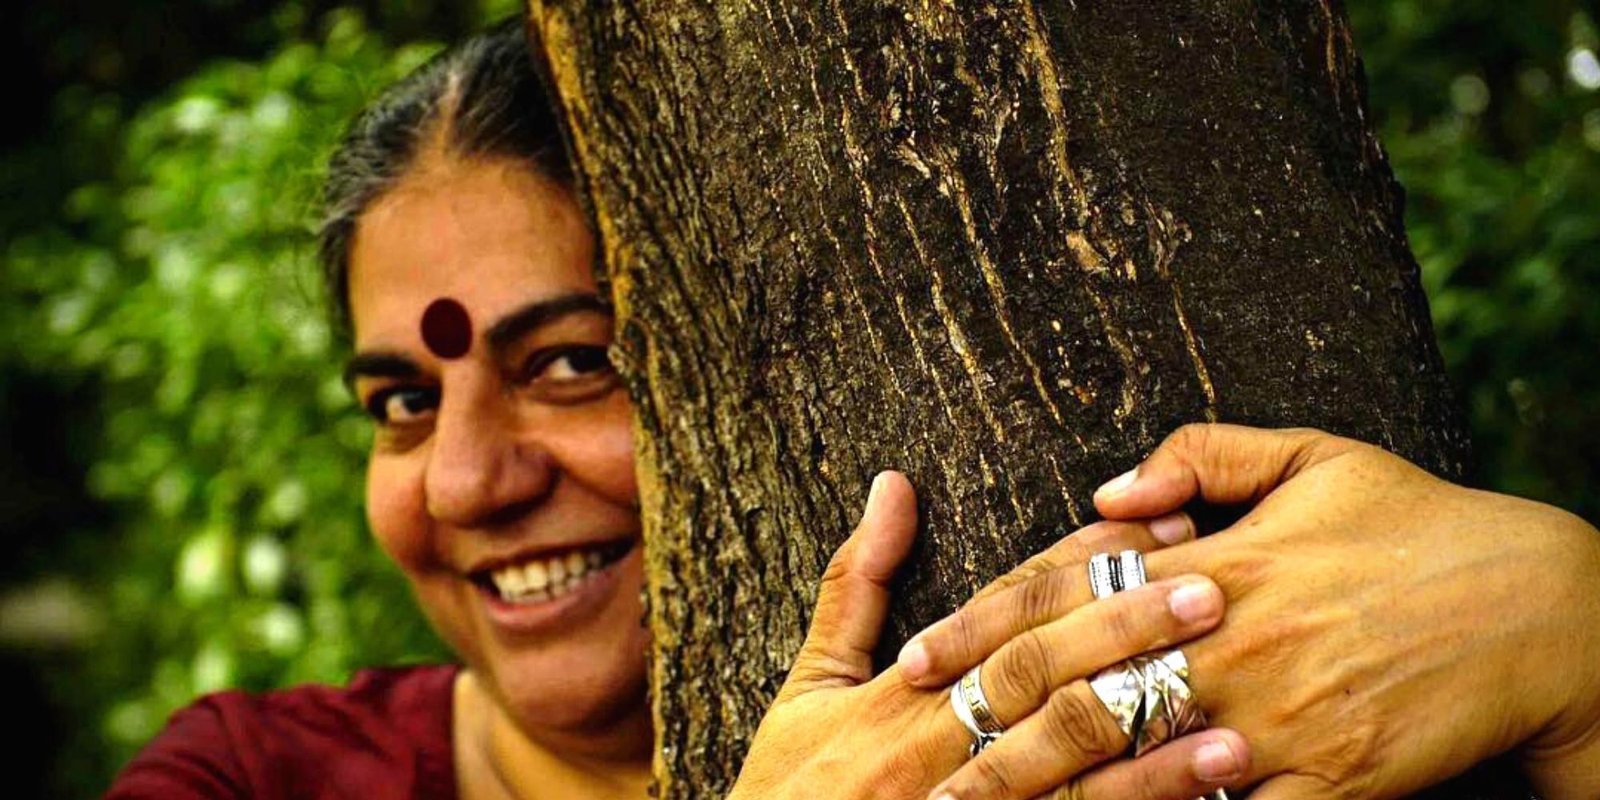 ‘Gandhi Of Grain’ – Vandana Shiva, Environmentalist Who’s Working To Make Our Food Chemical-free